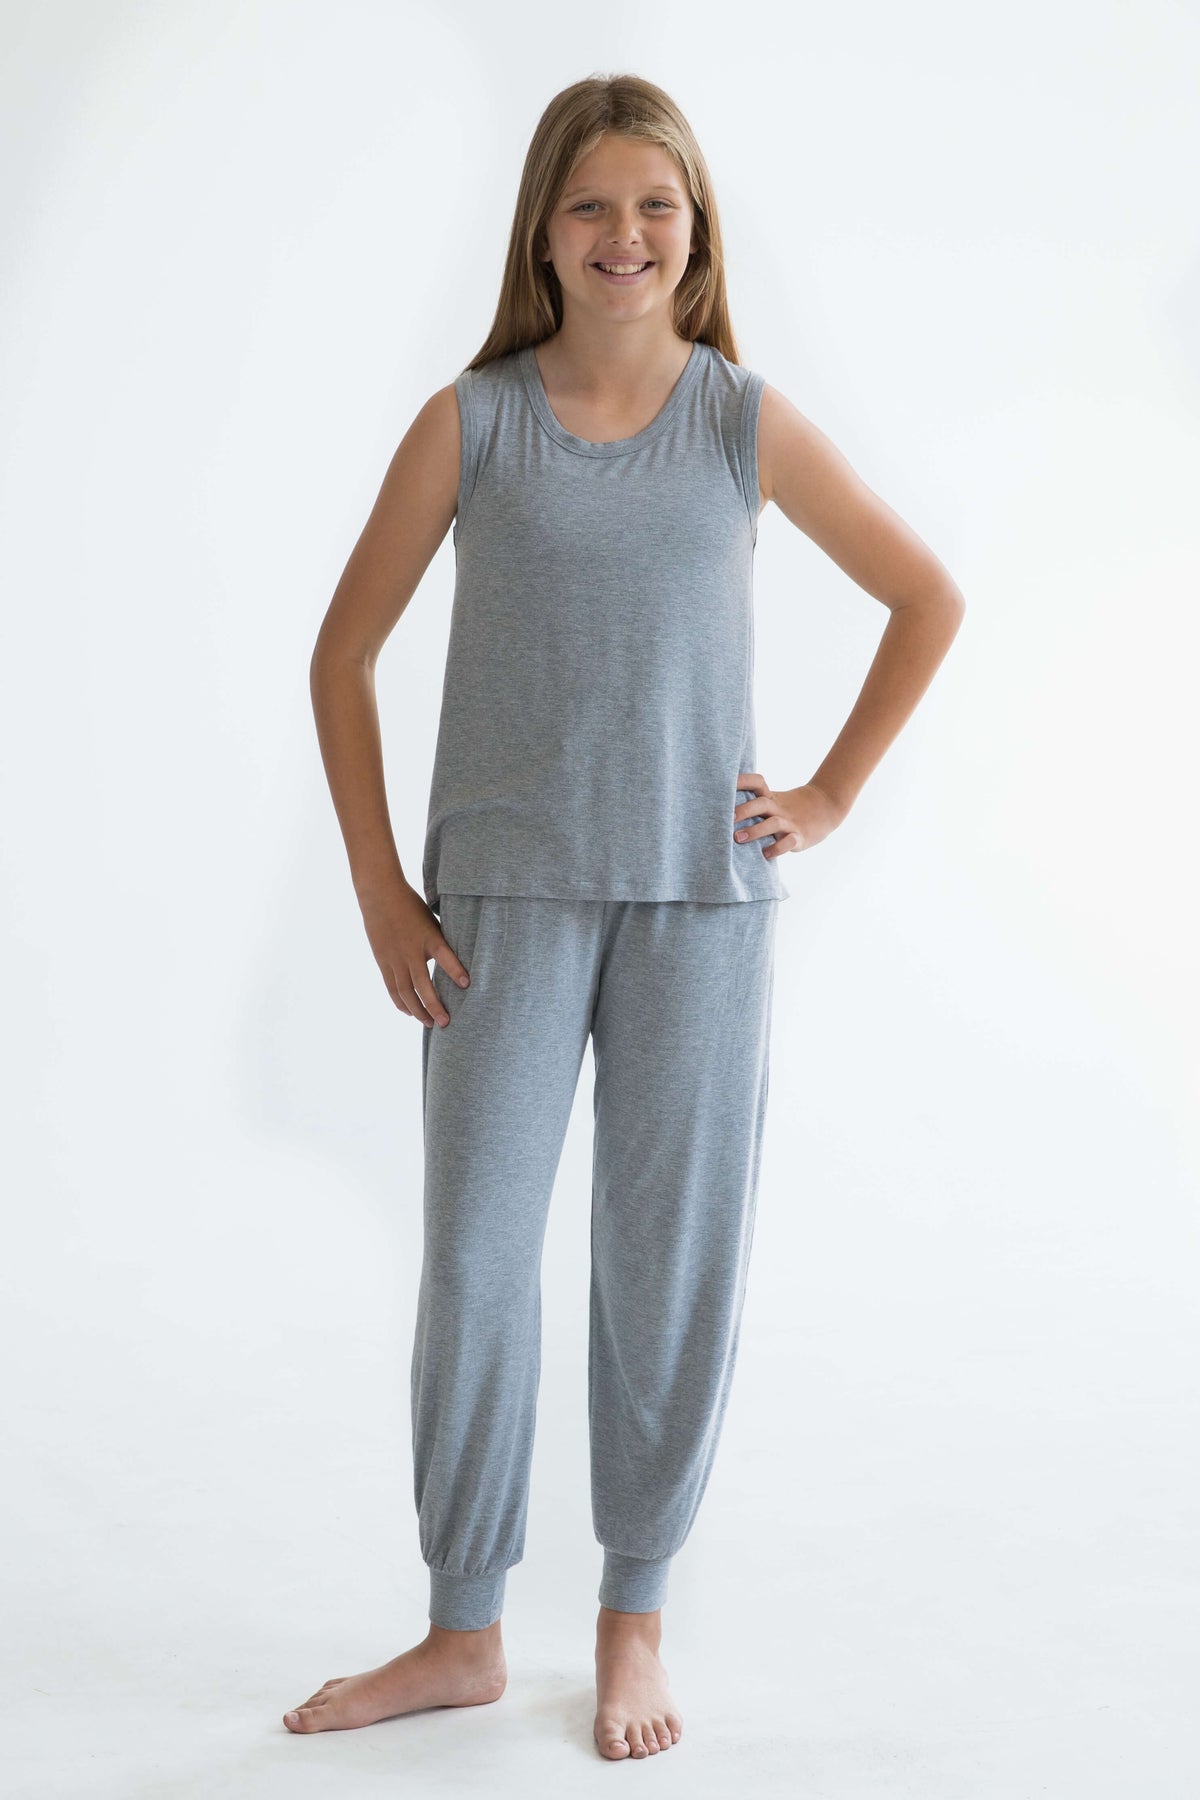 tween teen girls pyjamas PJ set long pants sleeveless tank top singlet grey front super soft VSCO sleepover mix and match